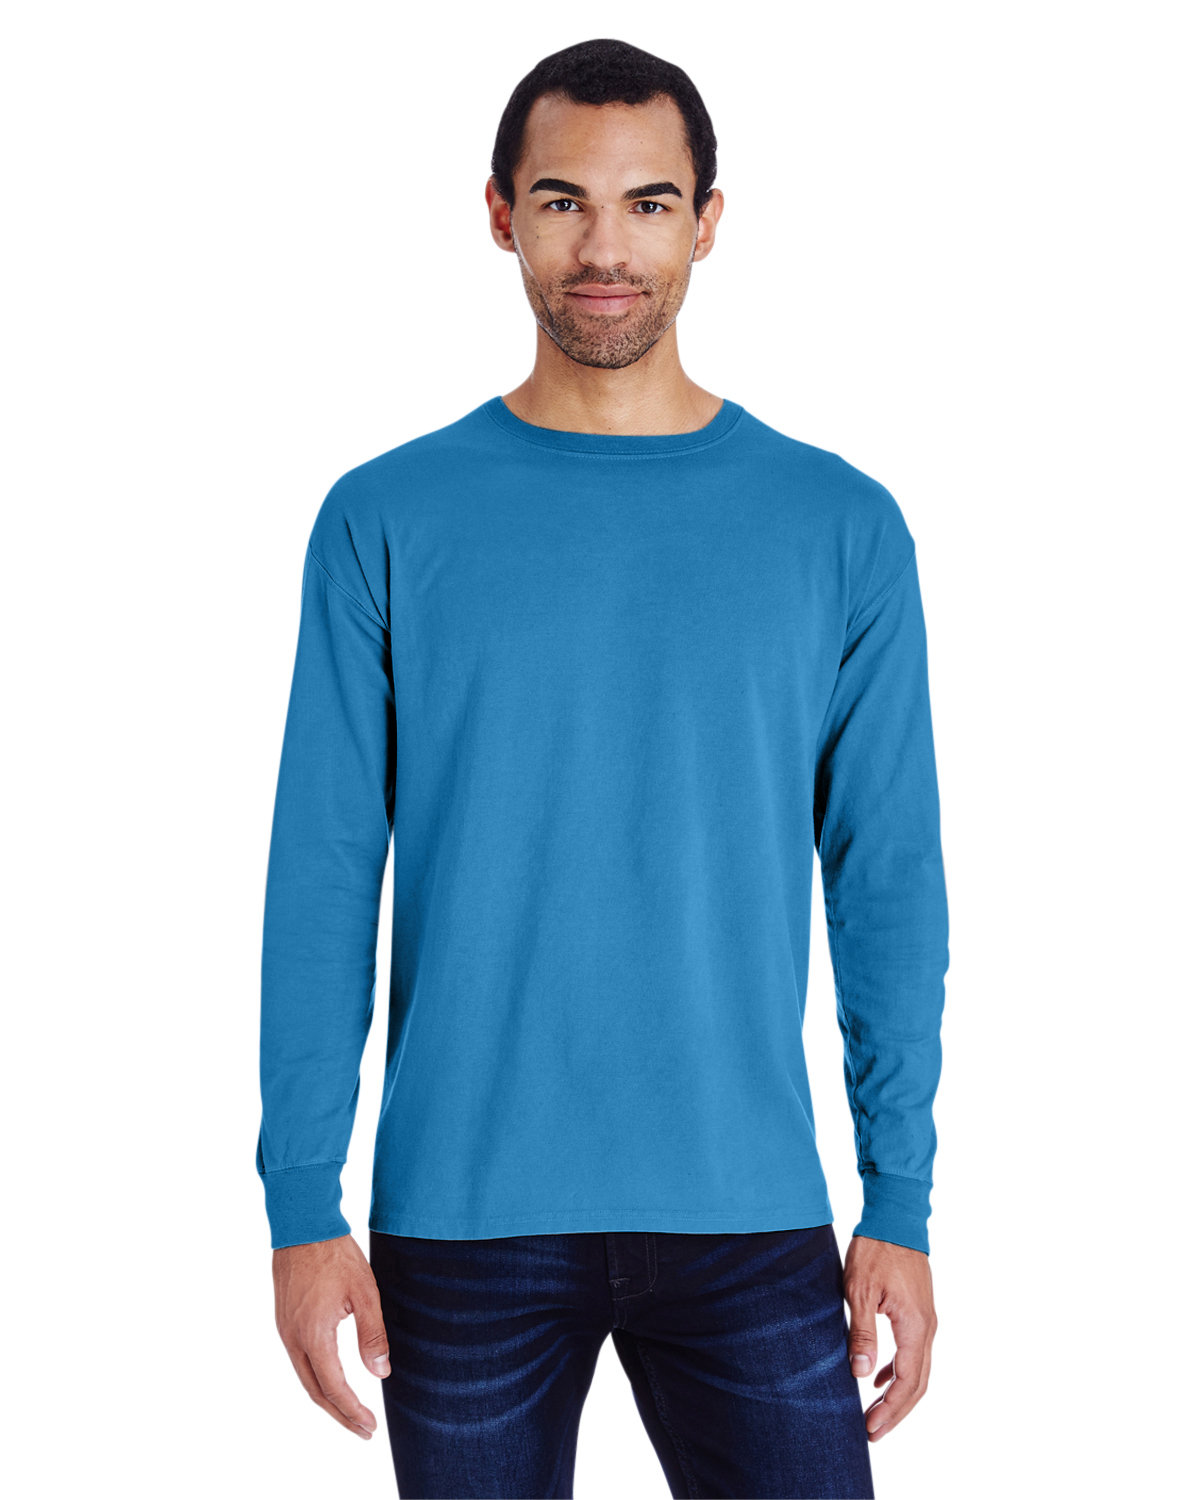 ComfortWash by Hanes Unisex Garment-Dyed Long-Sleeve T-Shirt SUMMER SKY BLUE 